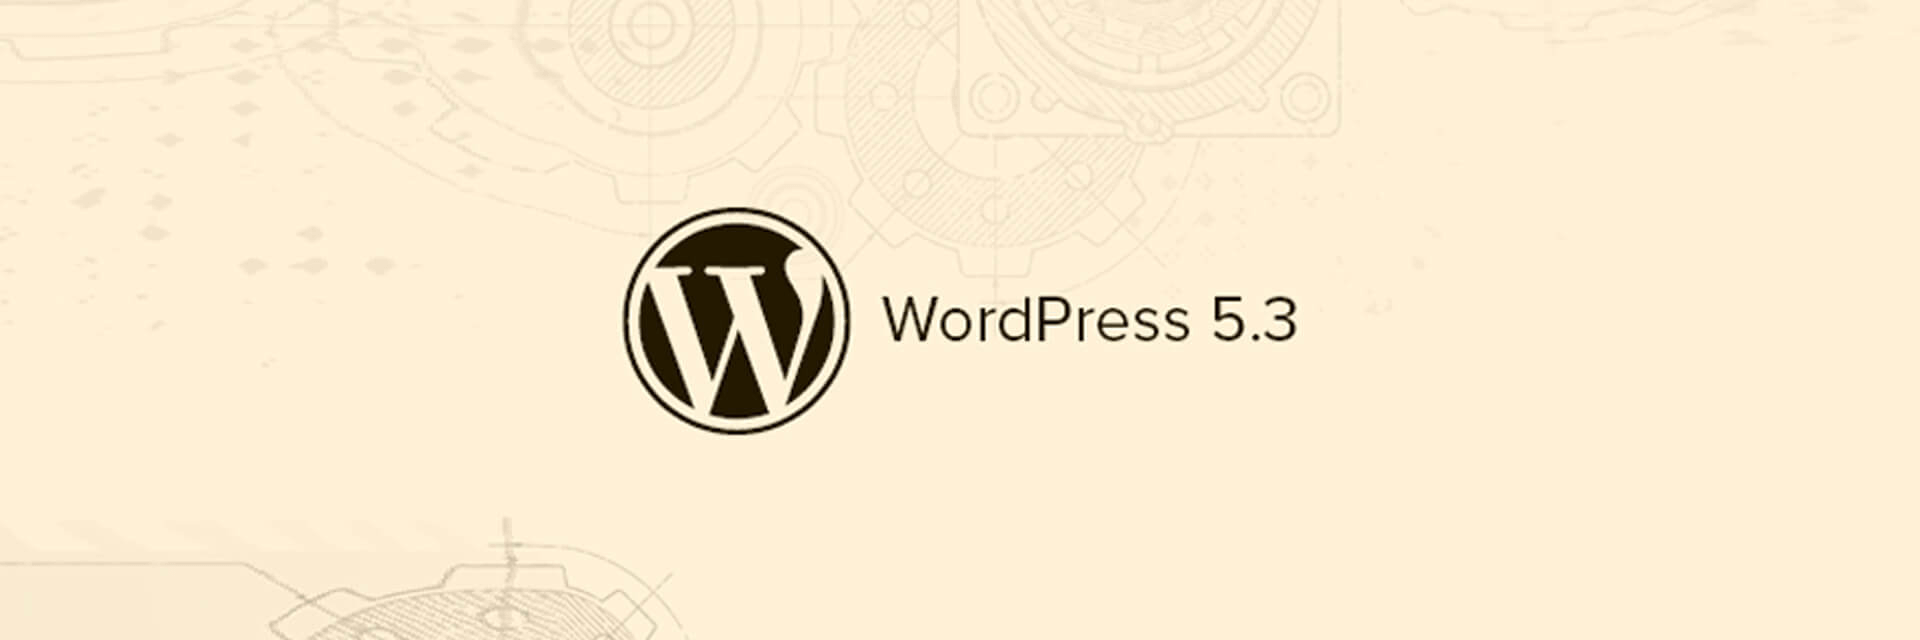 WordPress 5.3 – New Release